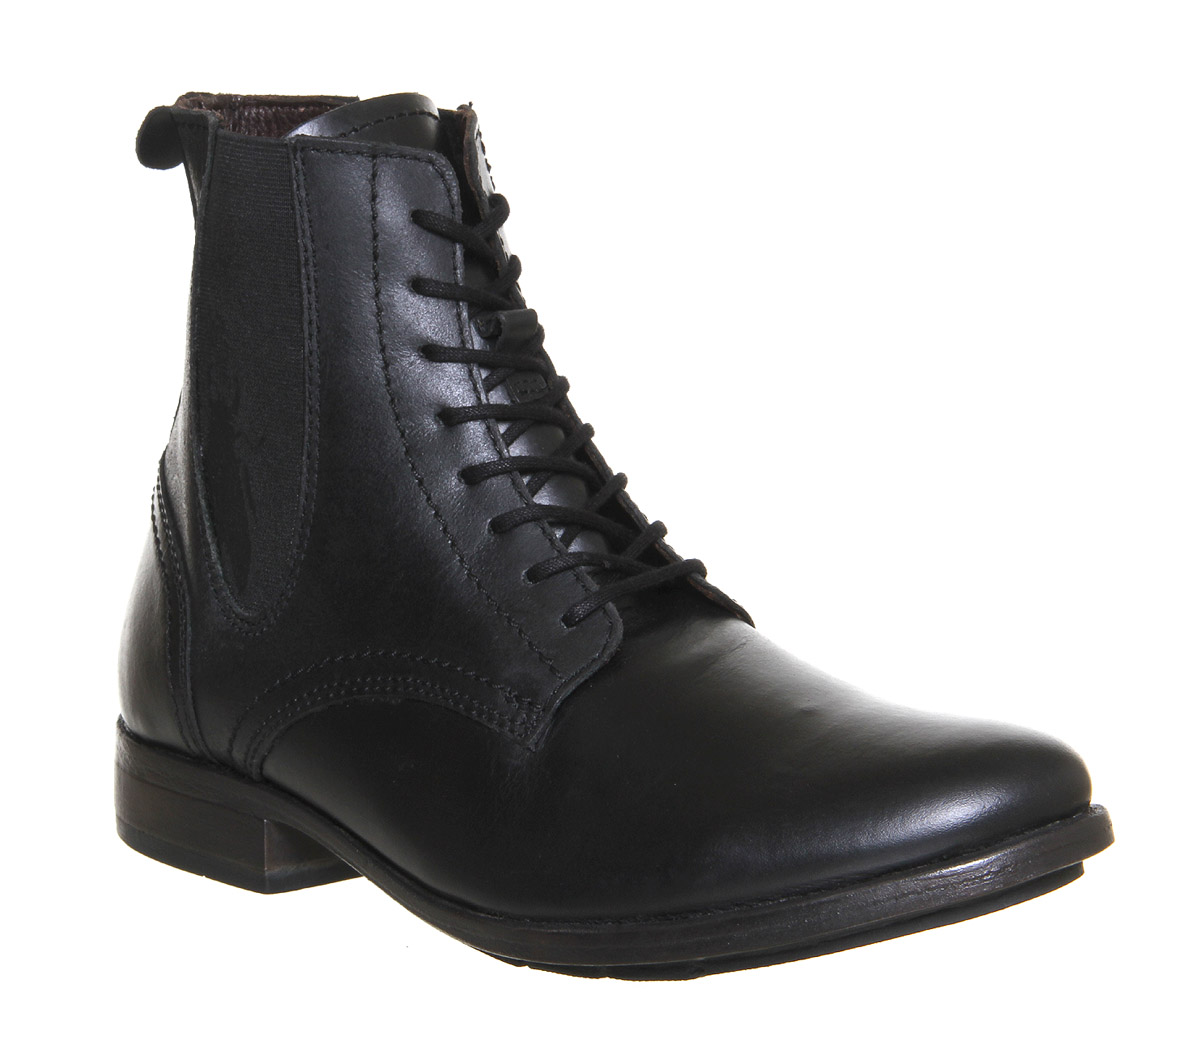 Fly LondonPoke bootsBlack Leather